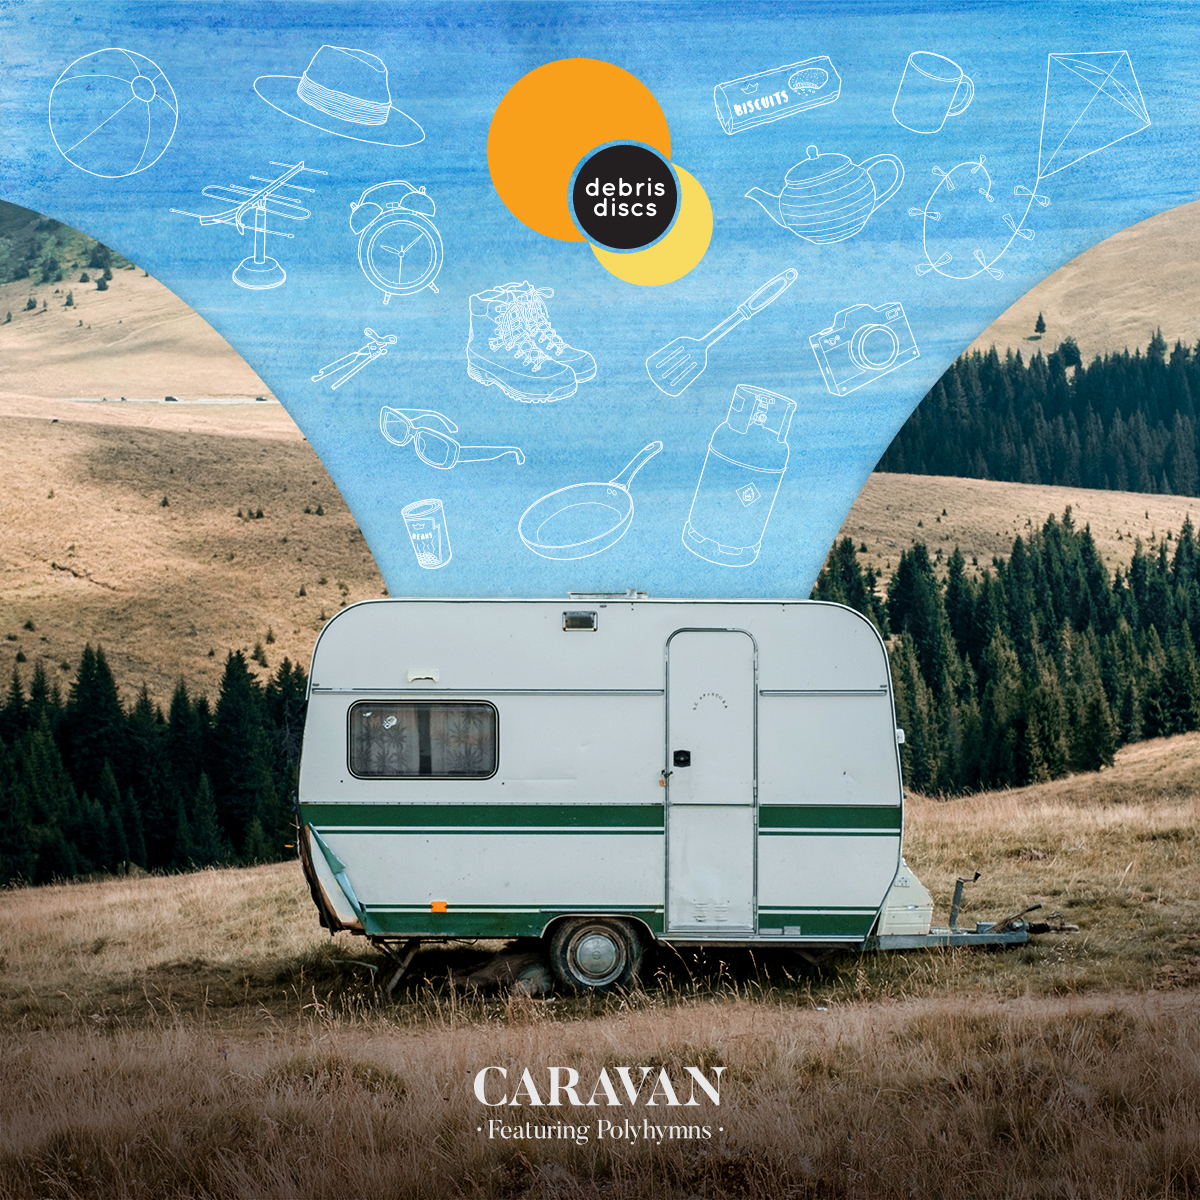 Cover artwork for Debris Discs single Caravan by gavstretchy